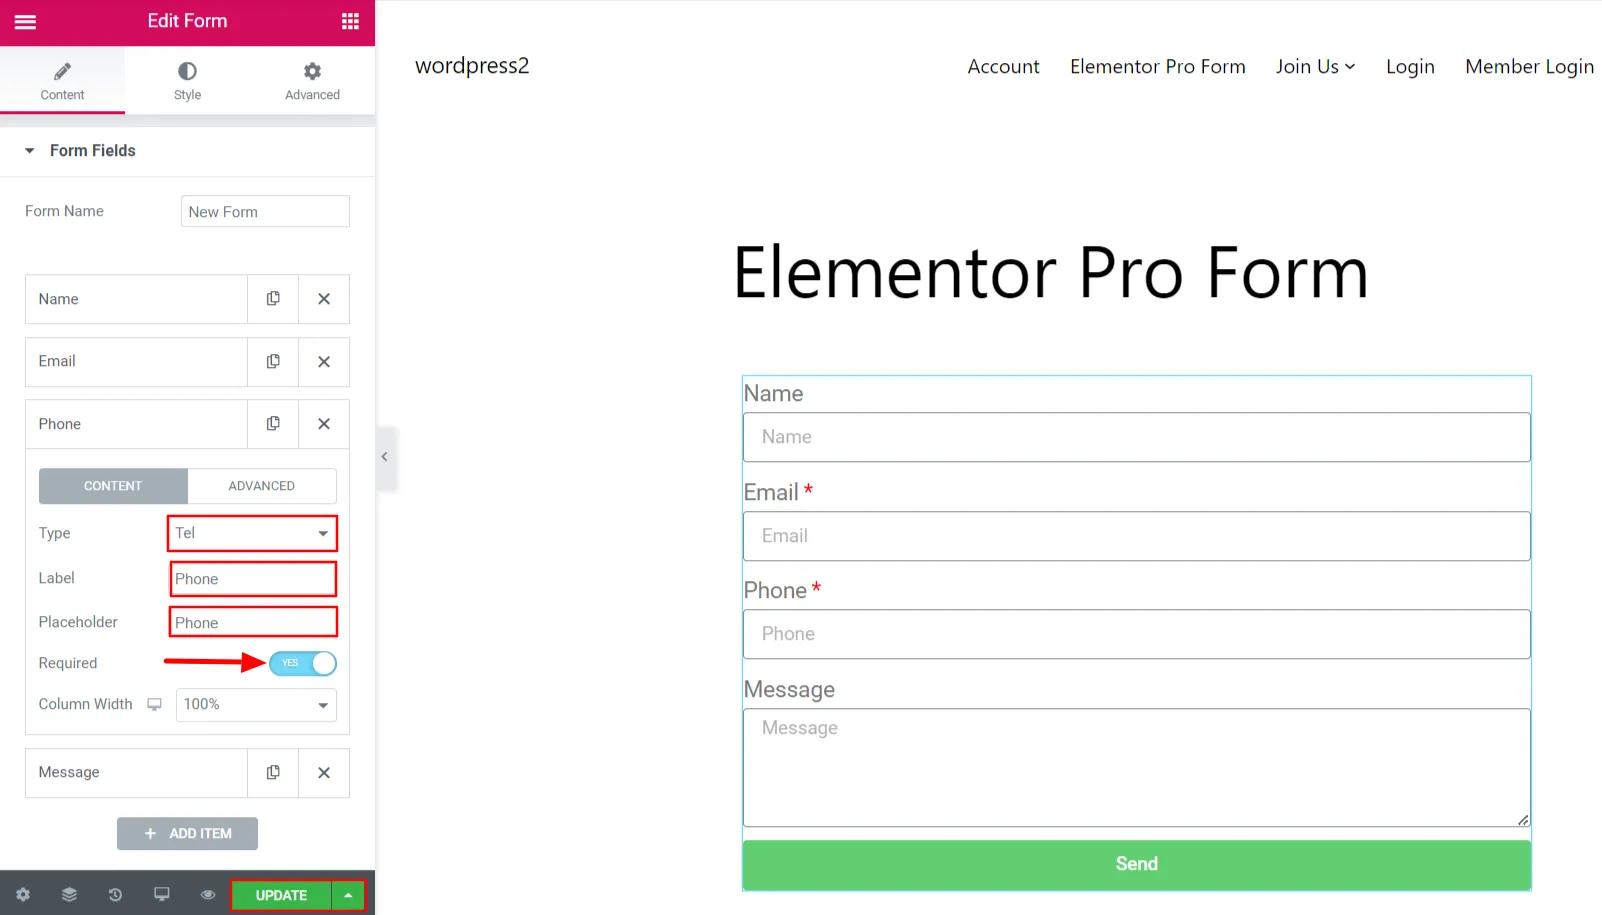 Elementor Pro Form - 업데이트 버튼 클릭